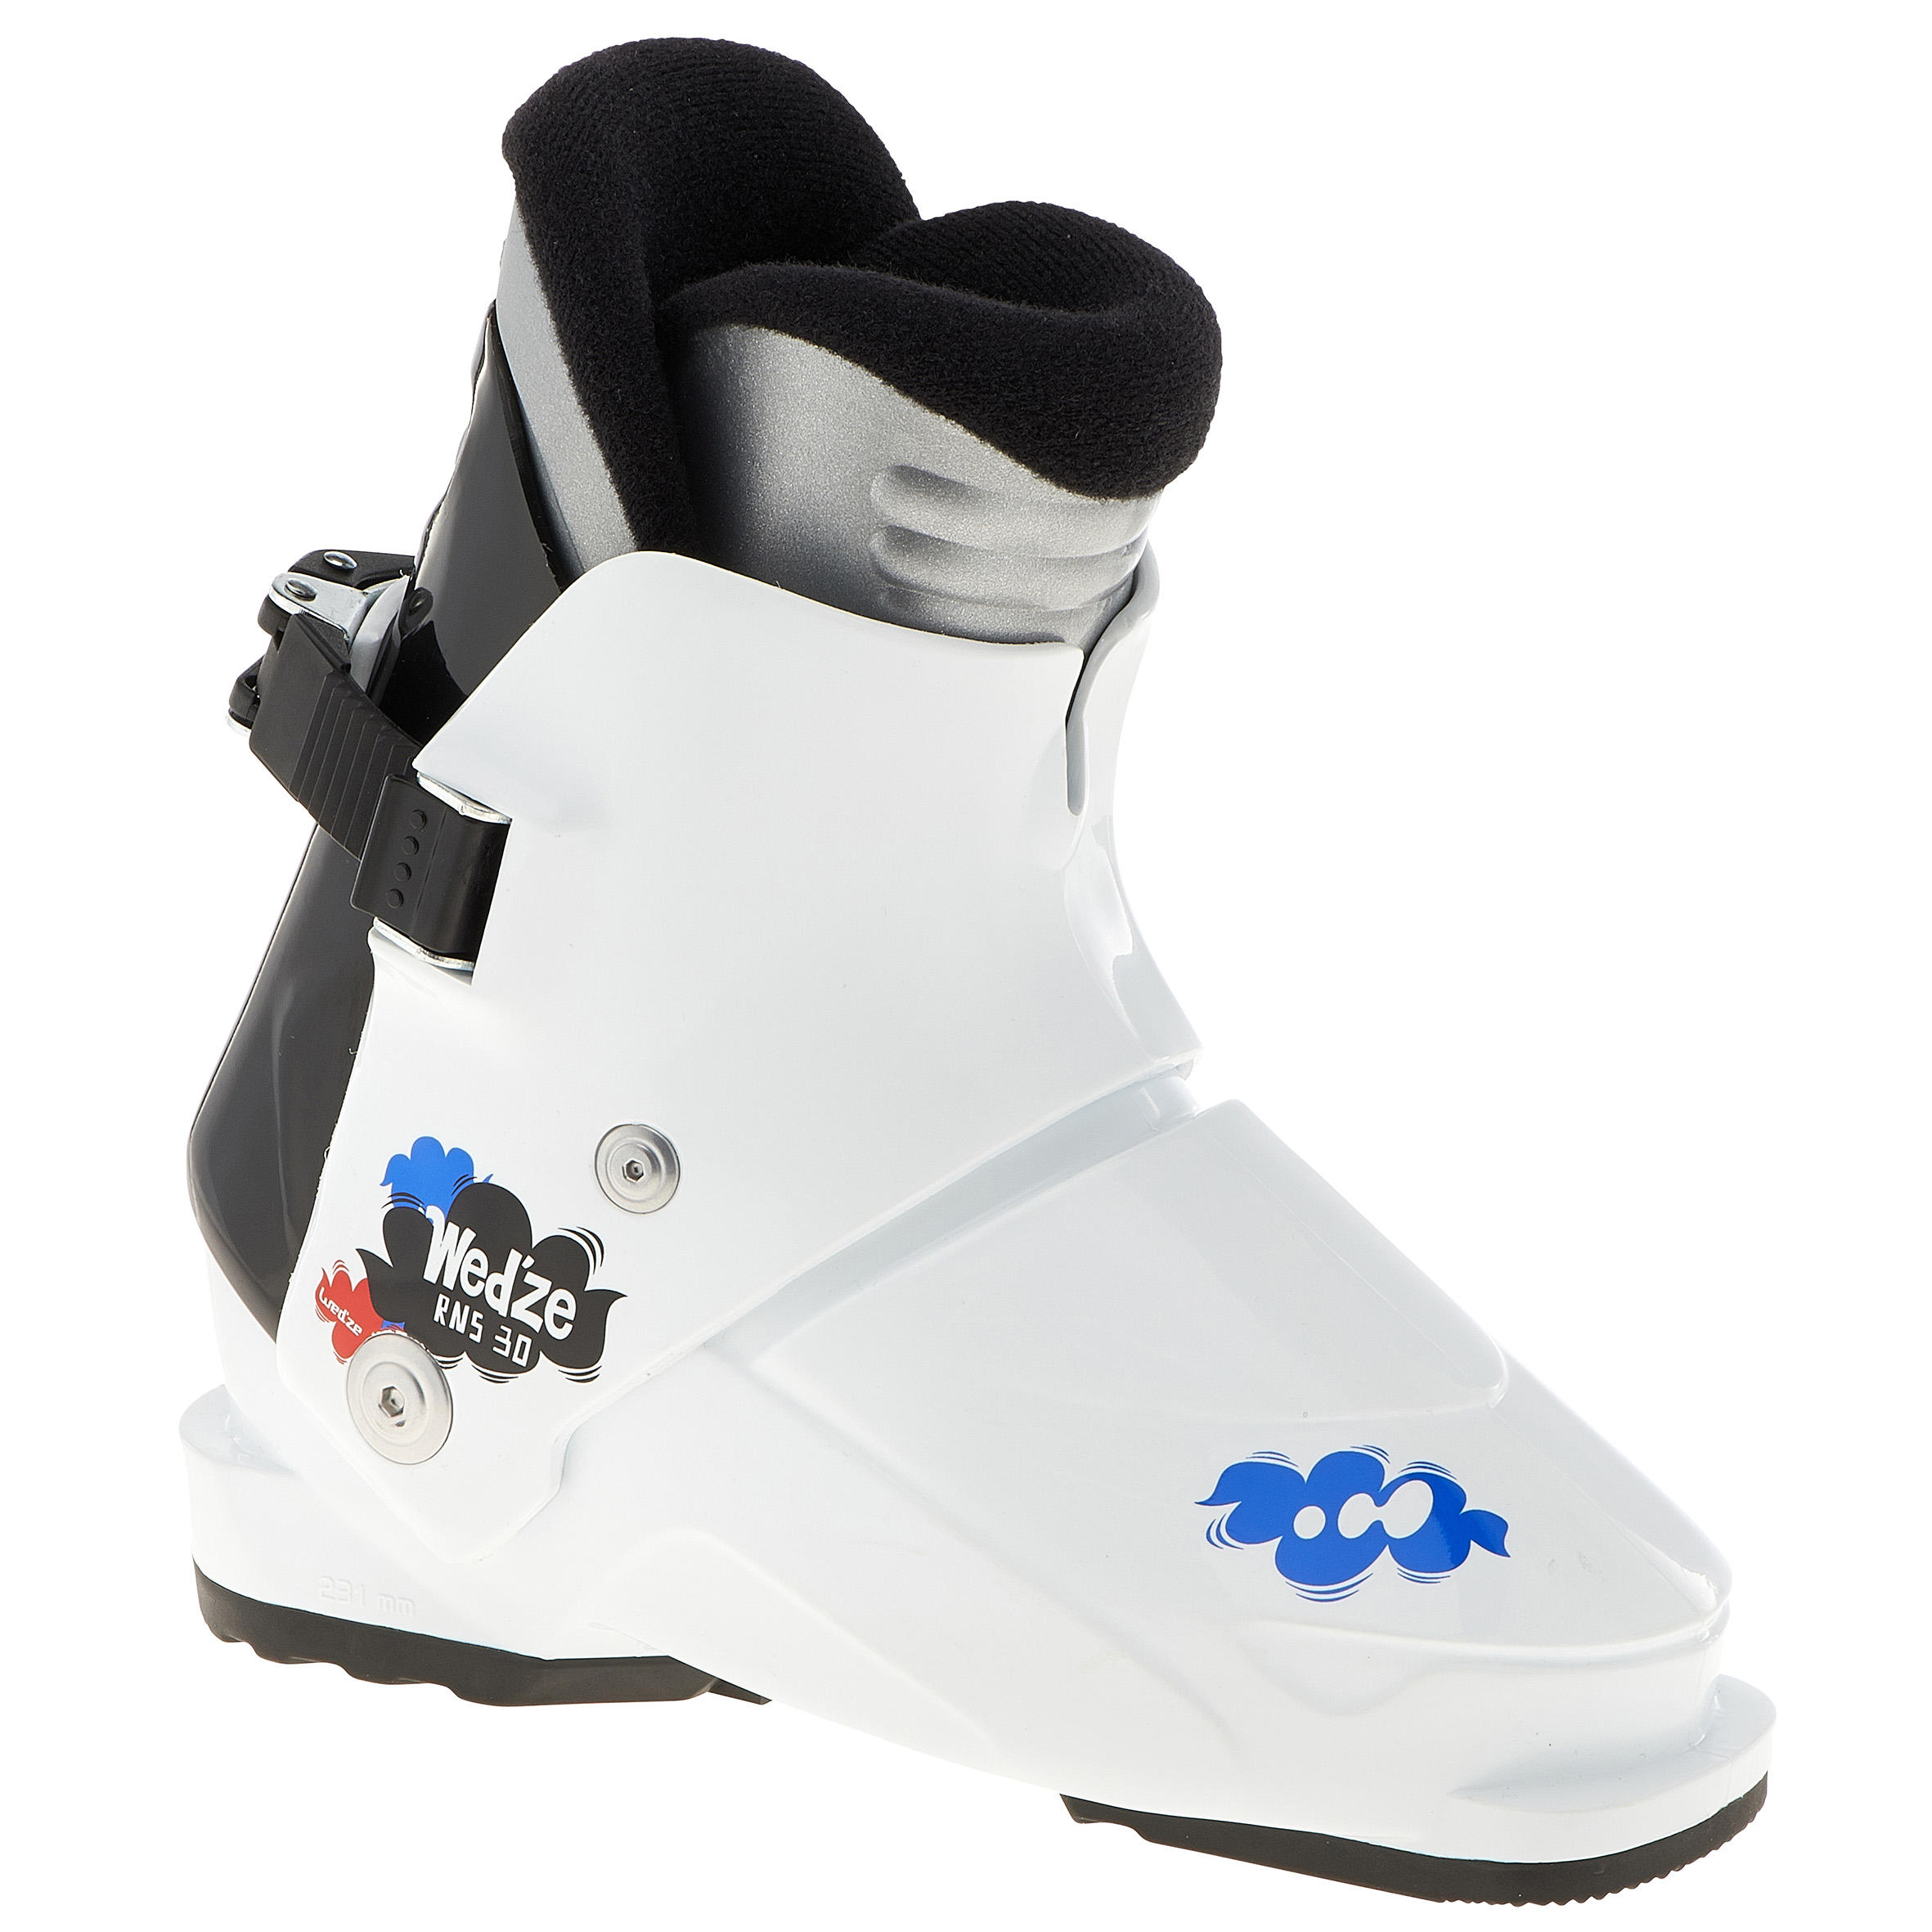 WEDZE RNS 30 miny children's ski boots